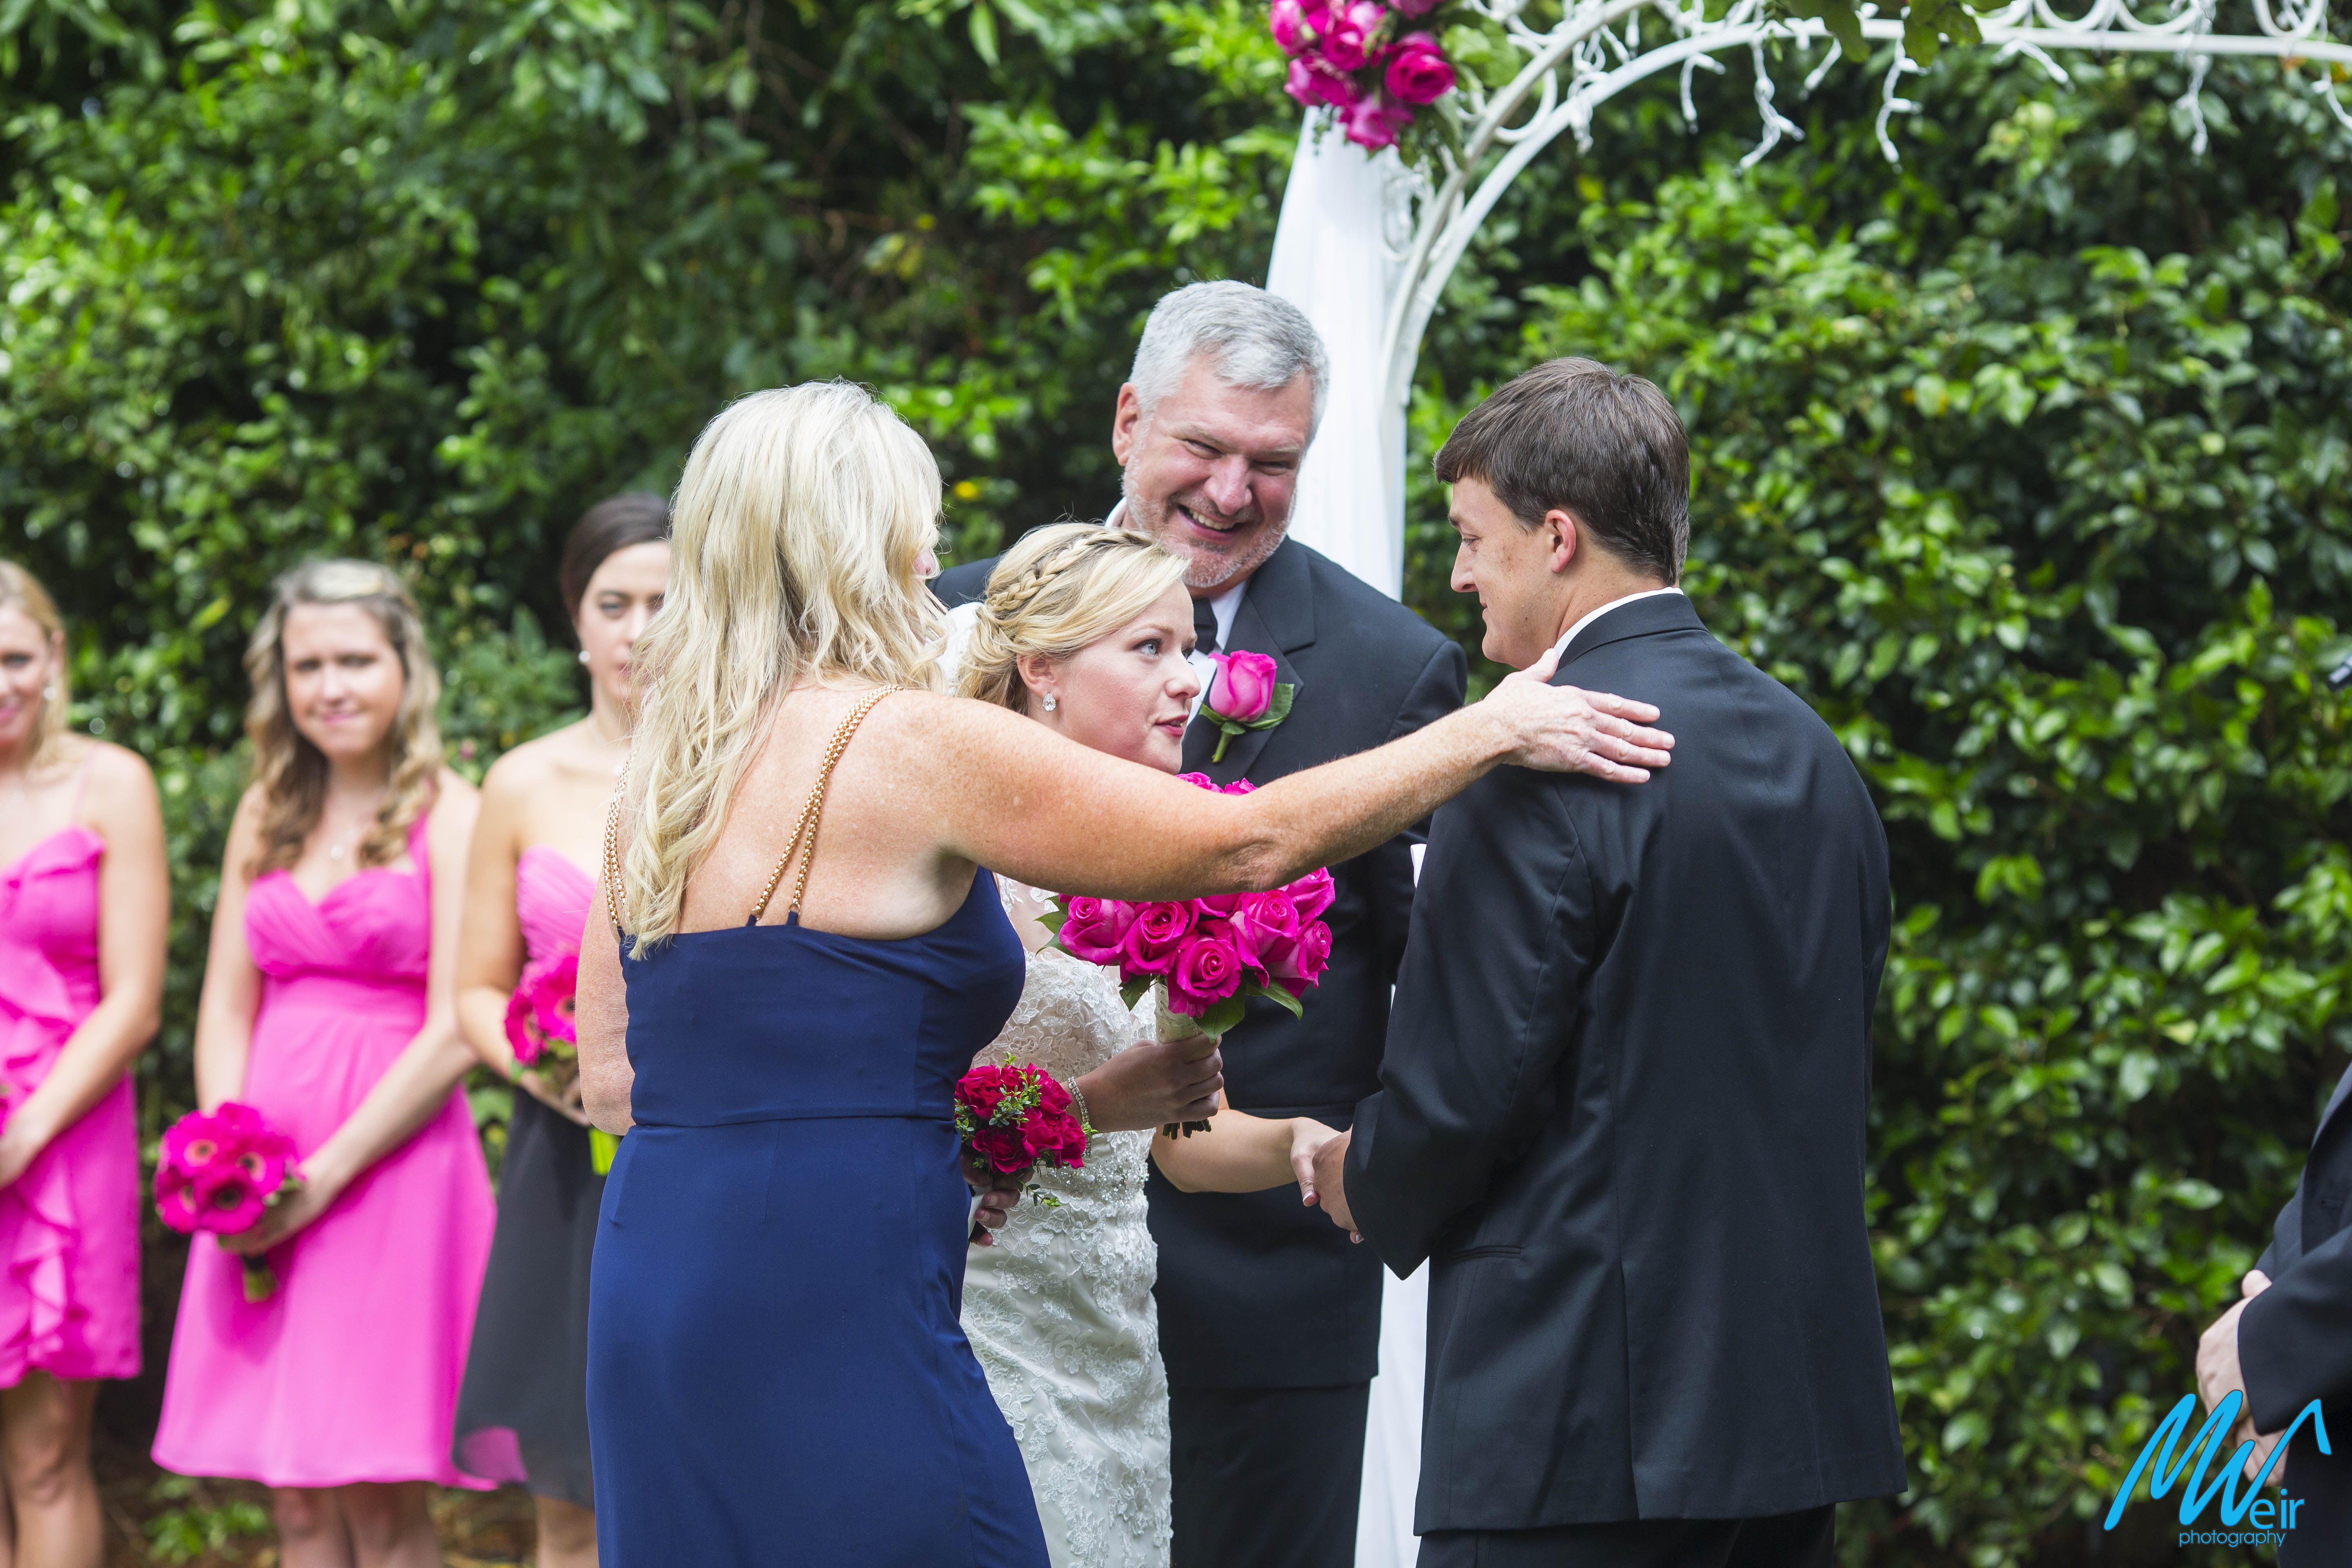 brides parents embracing groom